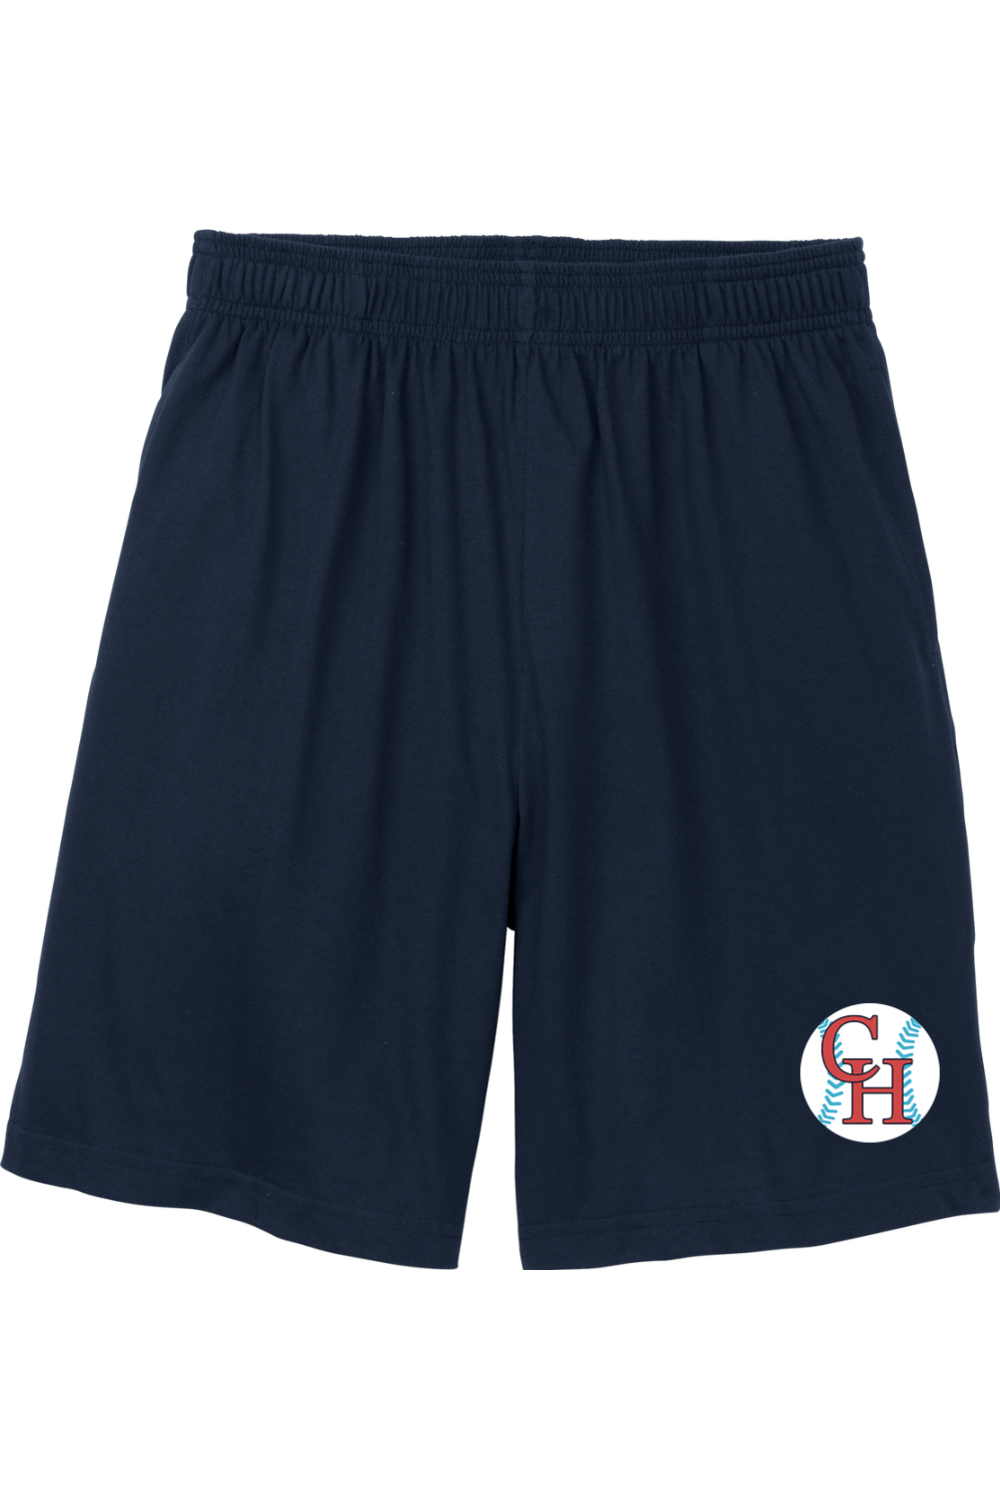 CH Baseball Monogram - Jersey Knit Short with Pockets - Yinzylvania